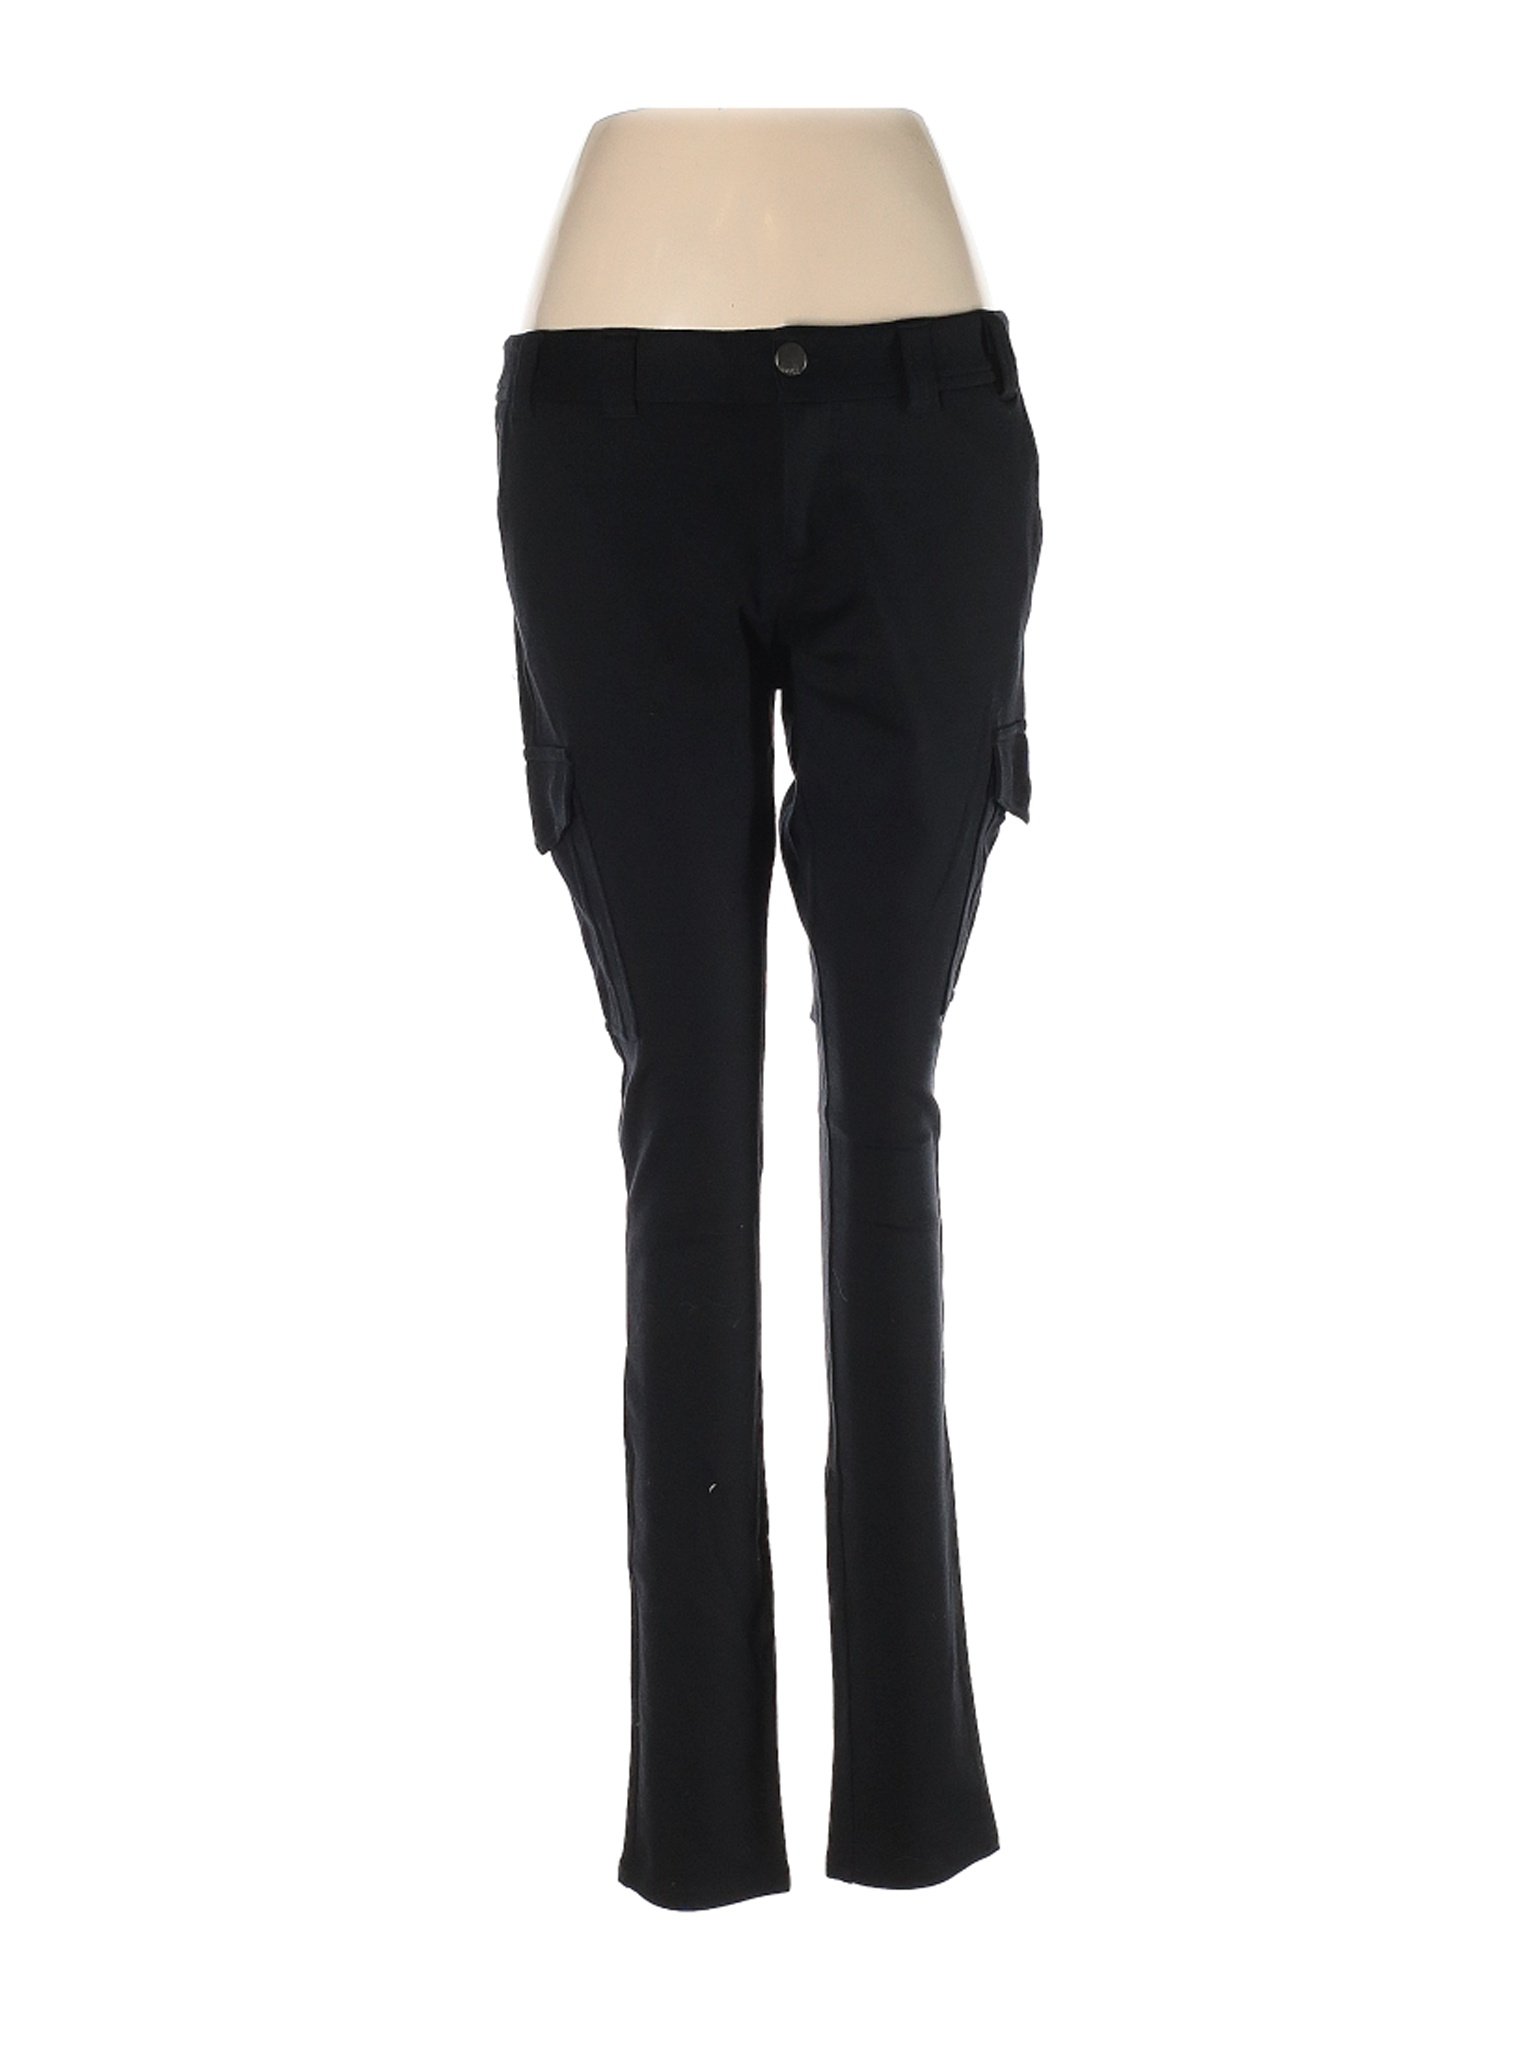 Express Women Black Casual Pants M | eBay